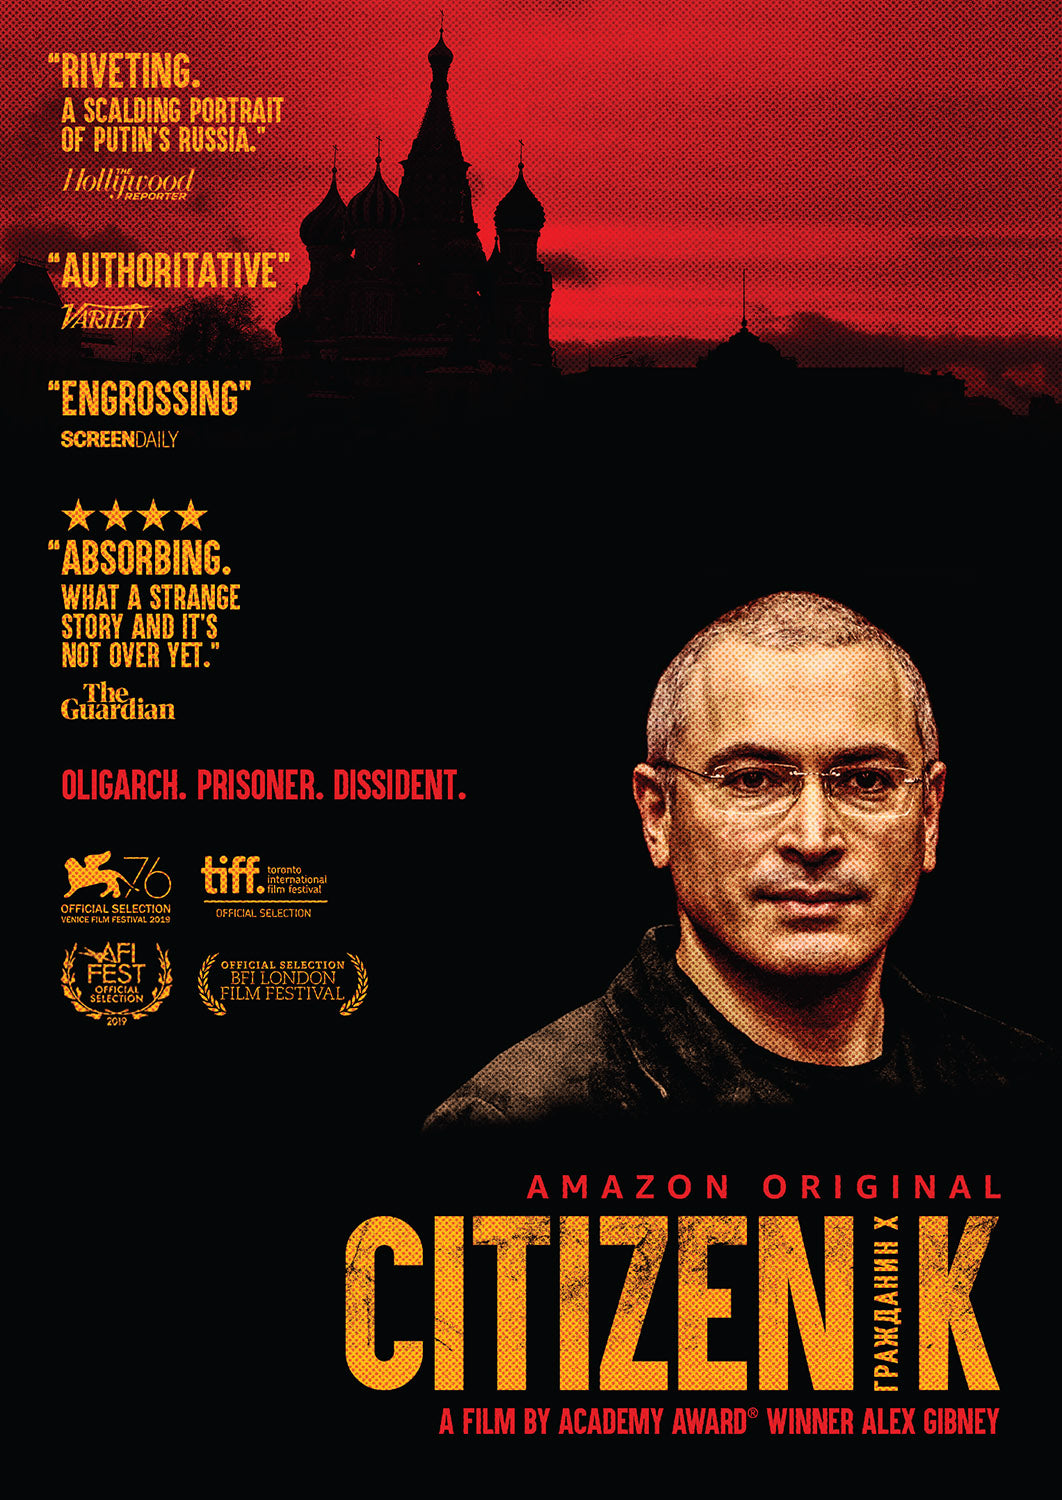 Citizen K cover art